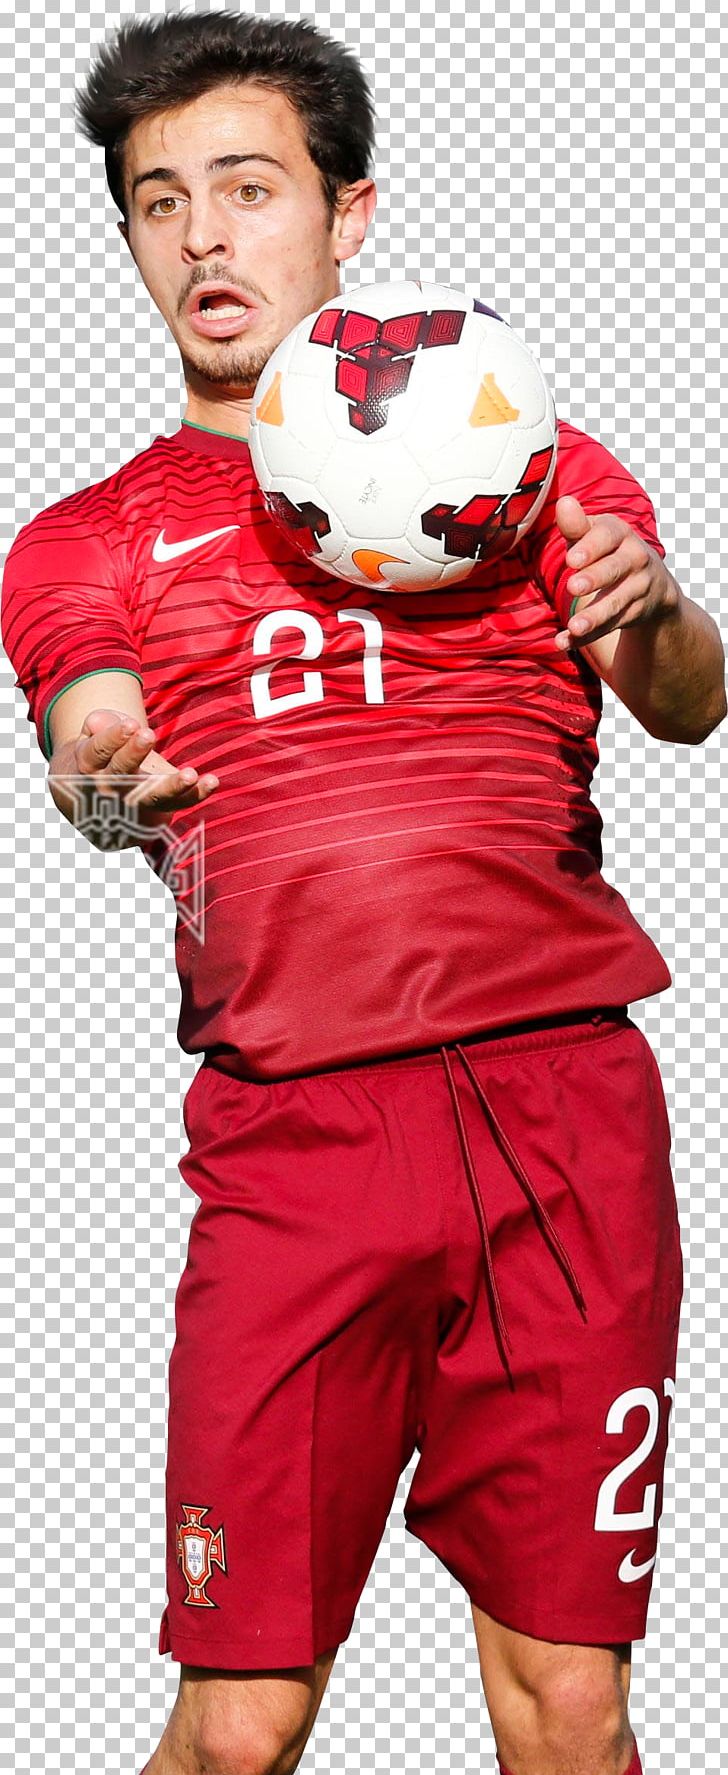 Bernardo Silva Portugal National Football Team Jersey Soccer Player PNG, Clipart, Bernardo Silva, Boy, Clothing, Football, Football Player Free PNG Download